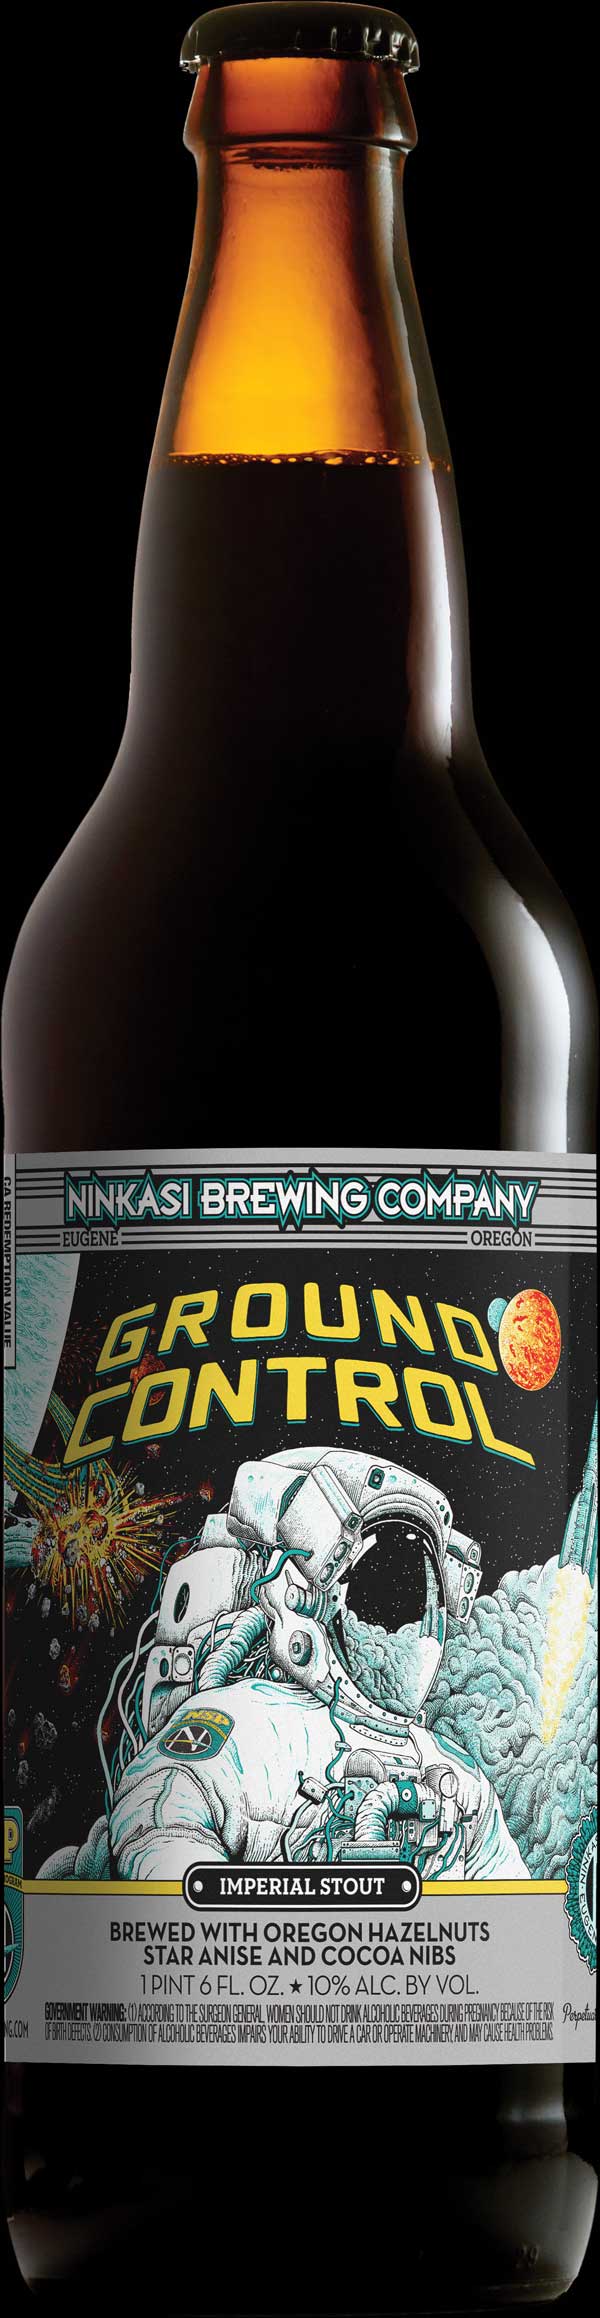 Ground Control Beer